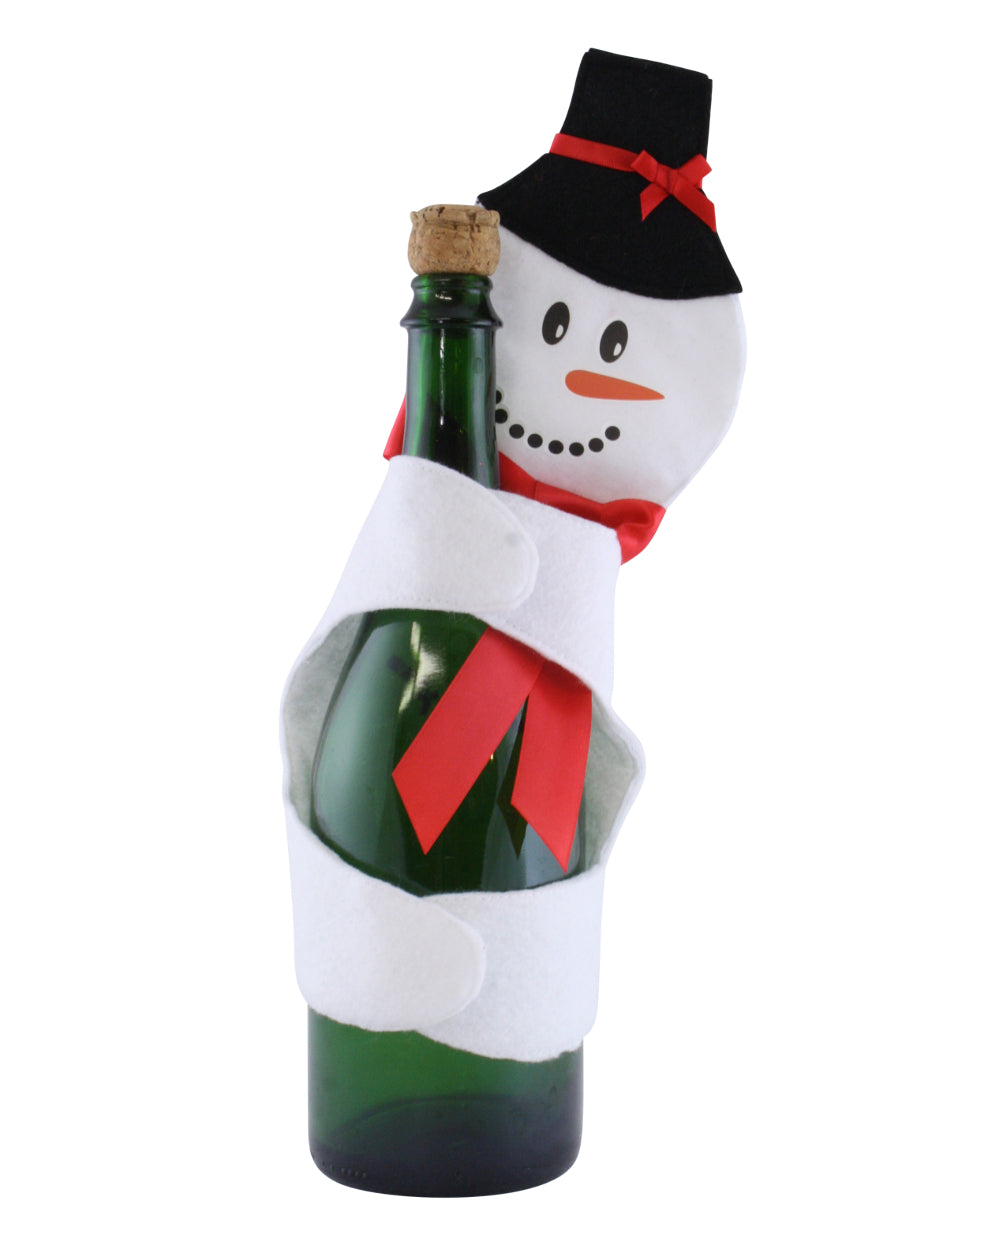 Snowman Wine Bottle Holder for the Holidays